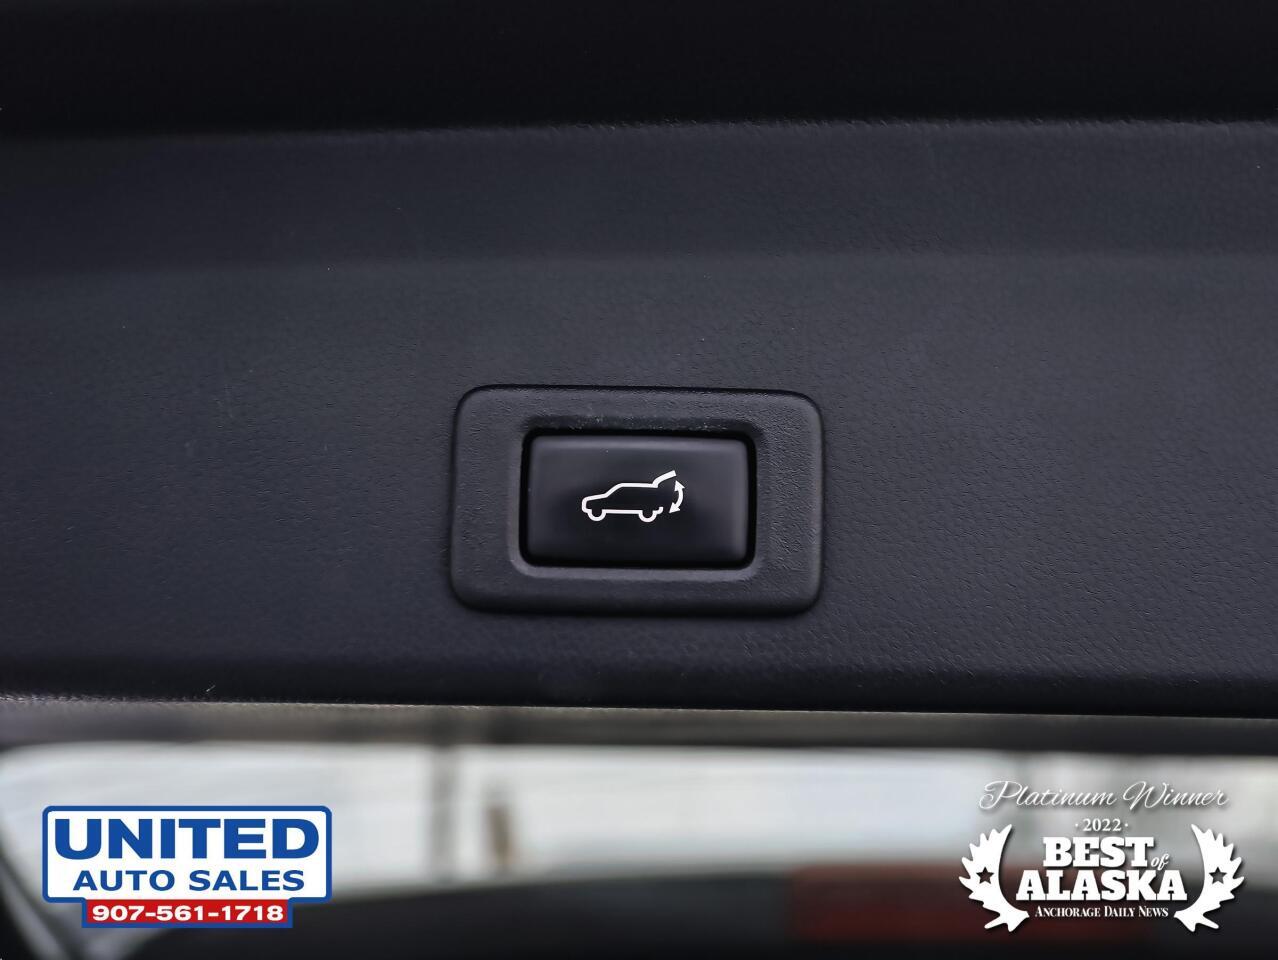 2019 Subaru Ascent Limited 7 Passenger AWD 4dr SUV 91